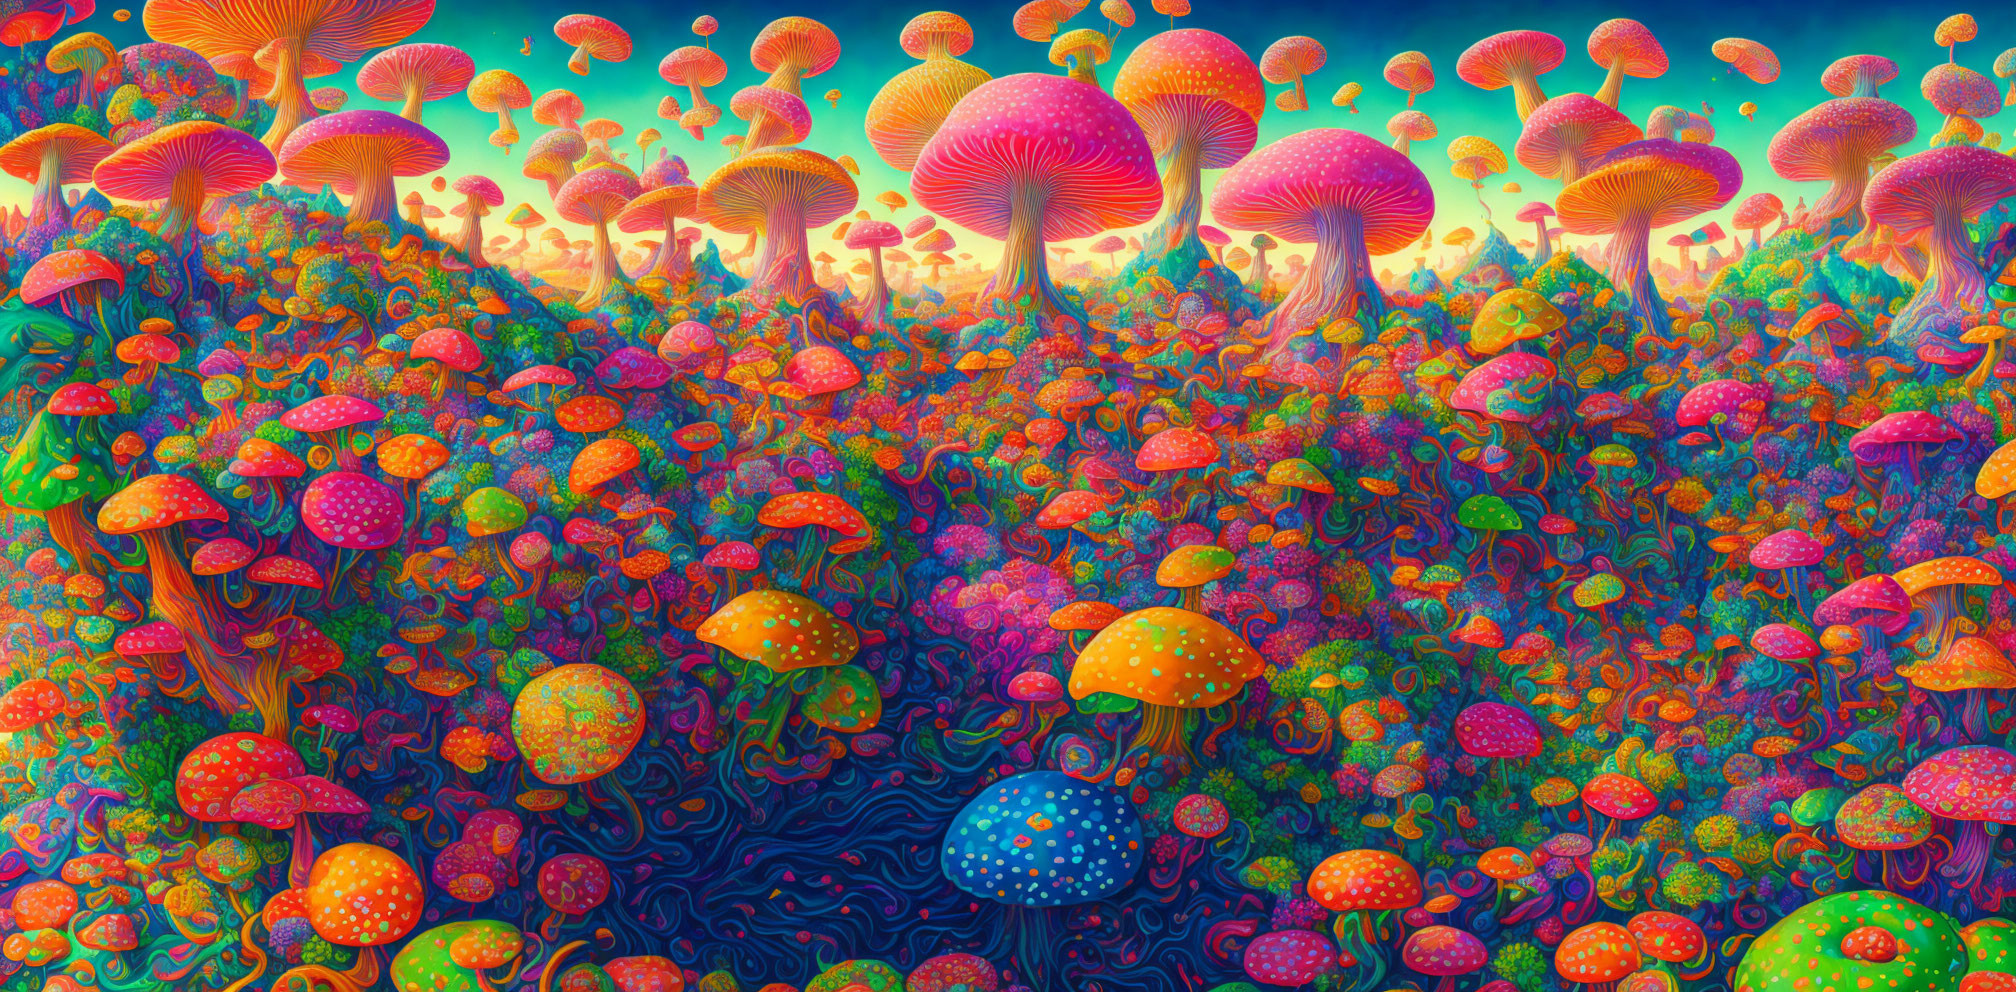 Colorful Psychedelic Mushroom Forest Landscape